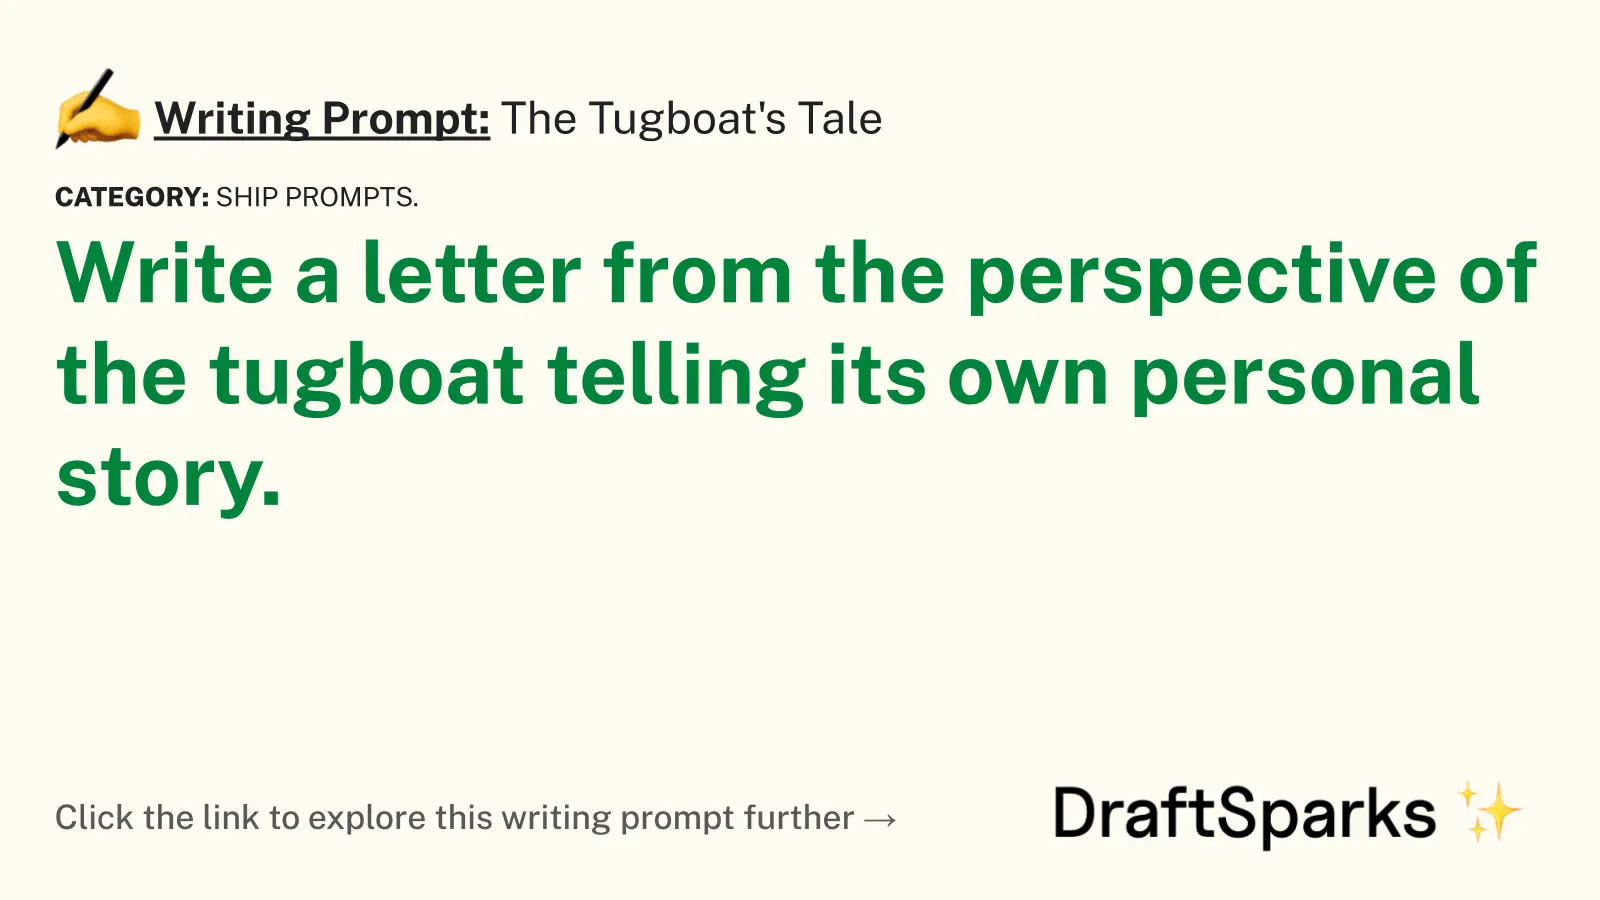 The Tugboat’s Tale